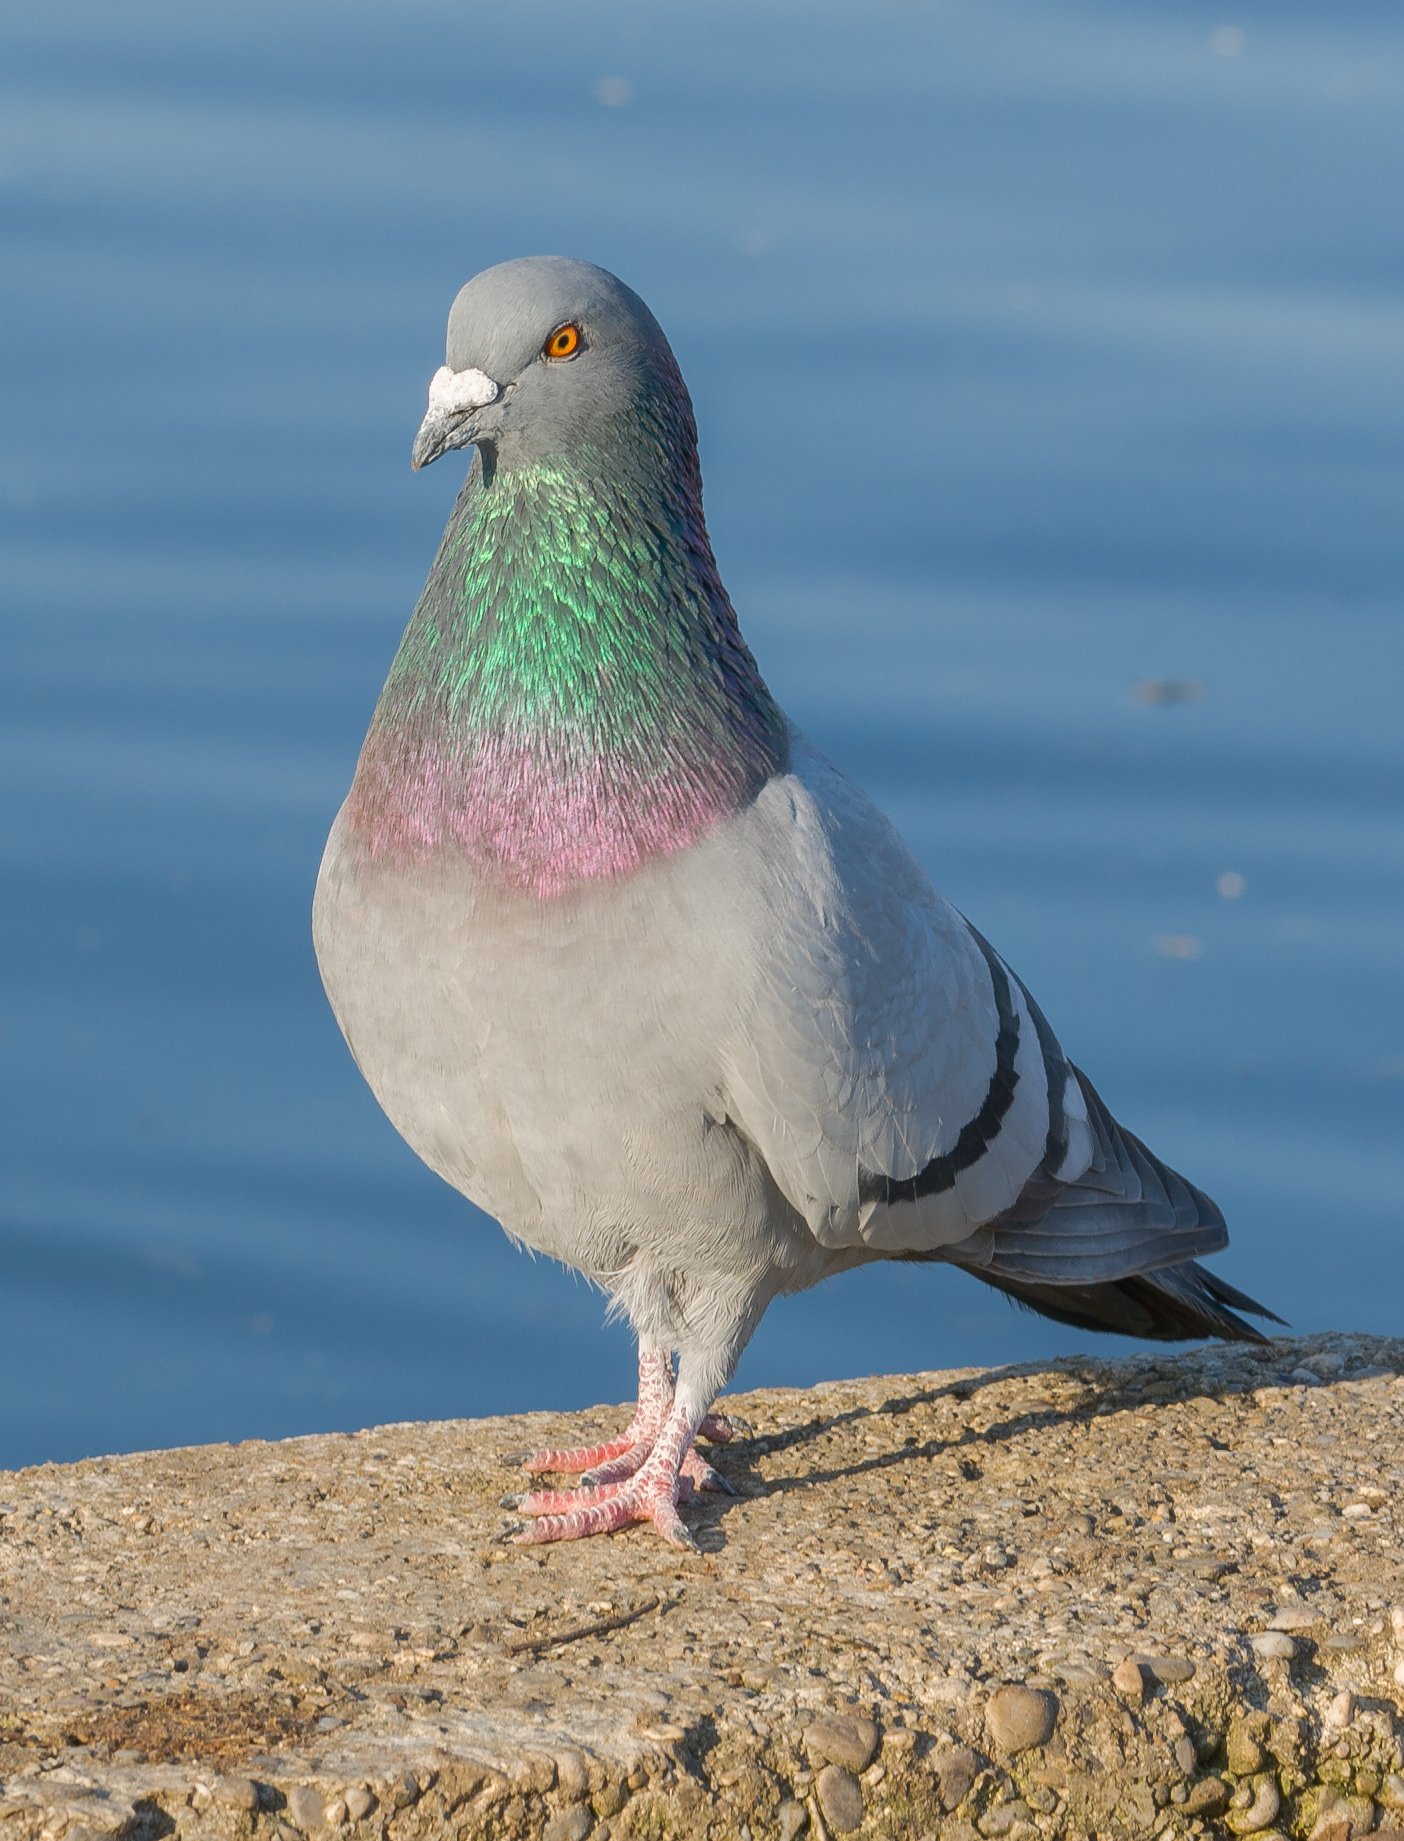 Rock Dove Bird (Pigeon) Photo, HD Image Free Download